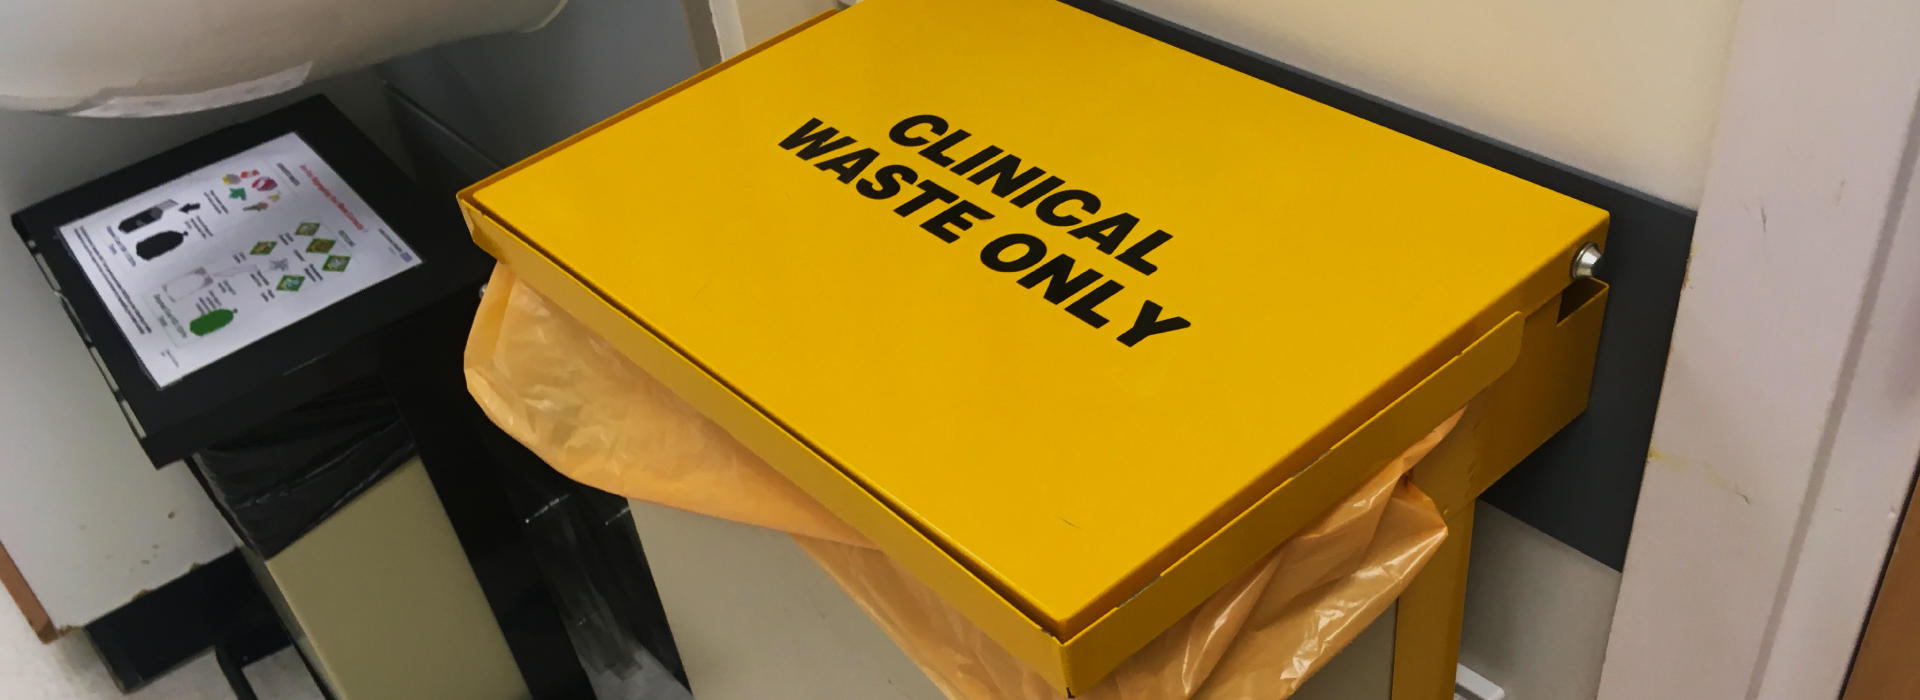 Cliniical waste only bin